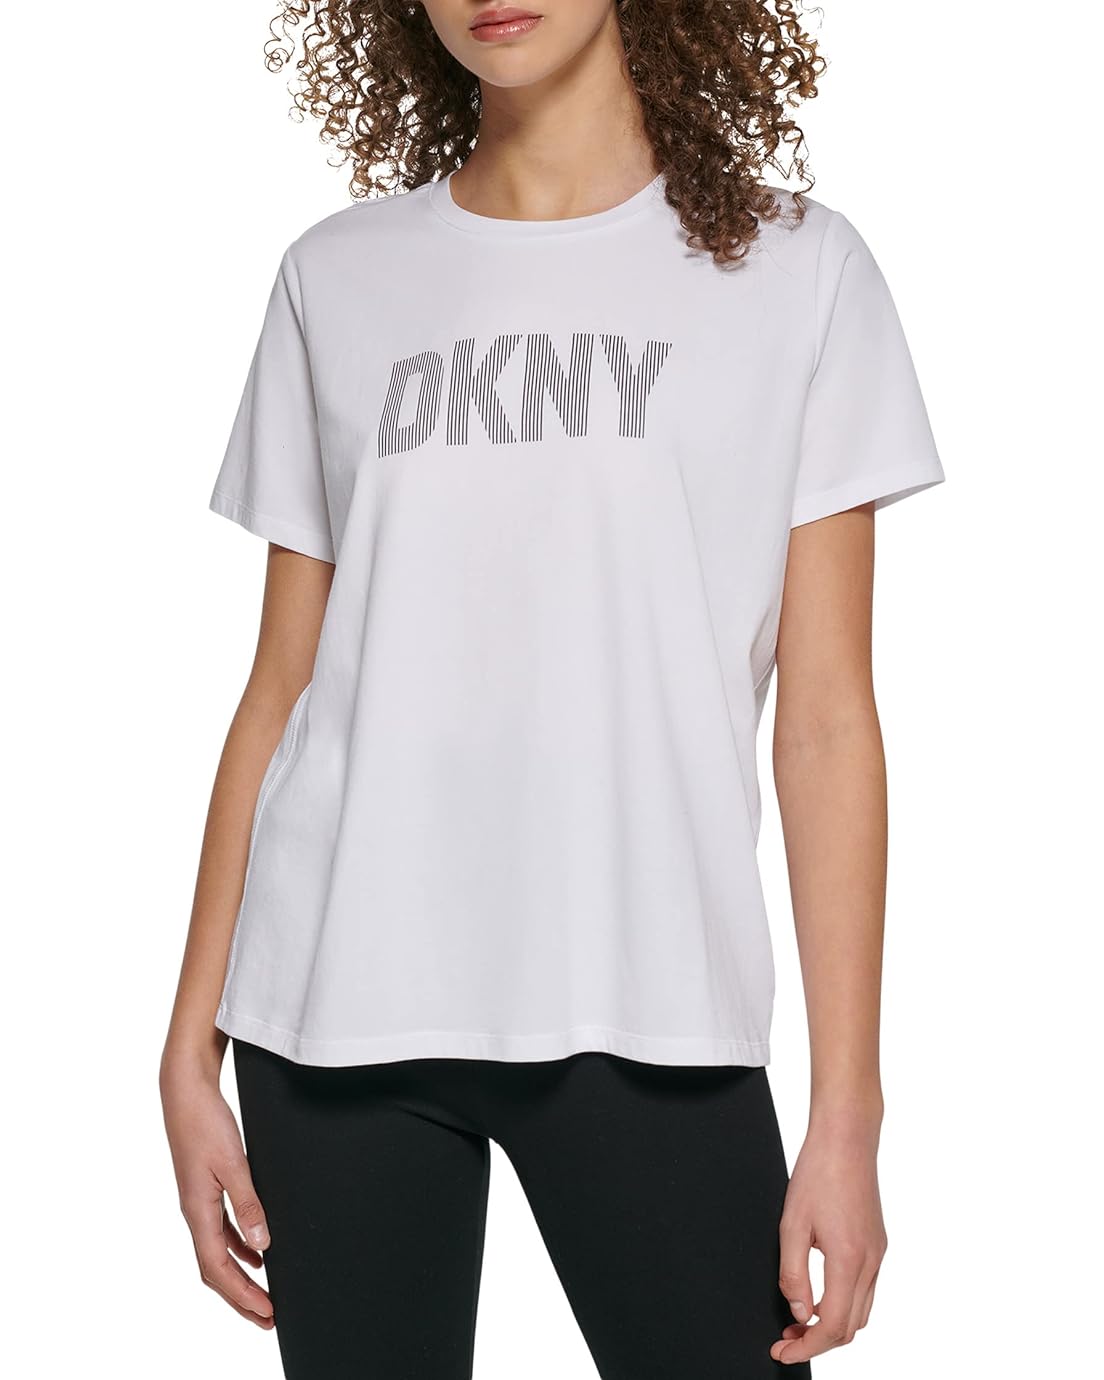 DKNY Stripe Logo Tee